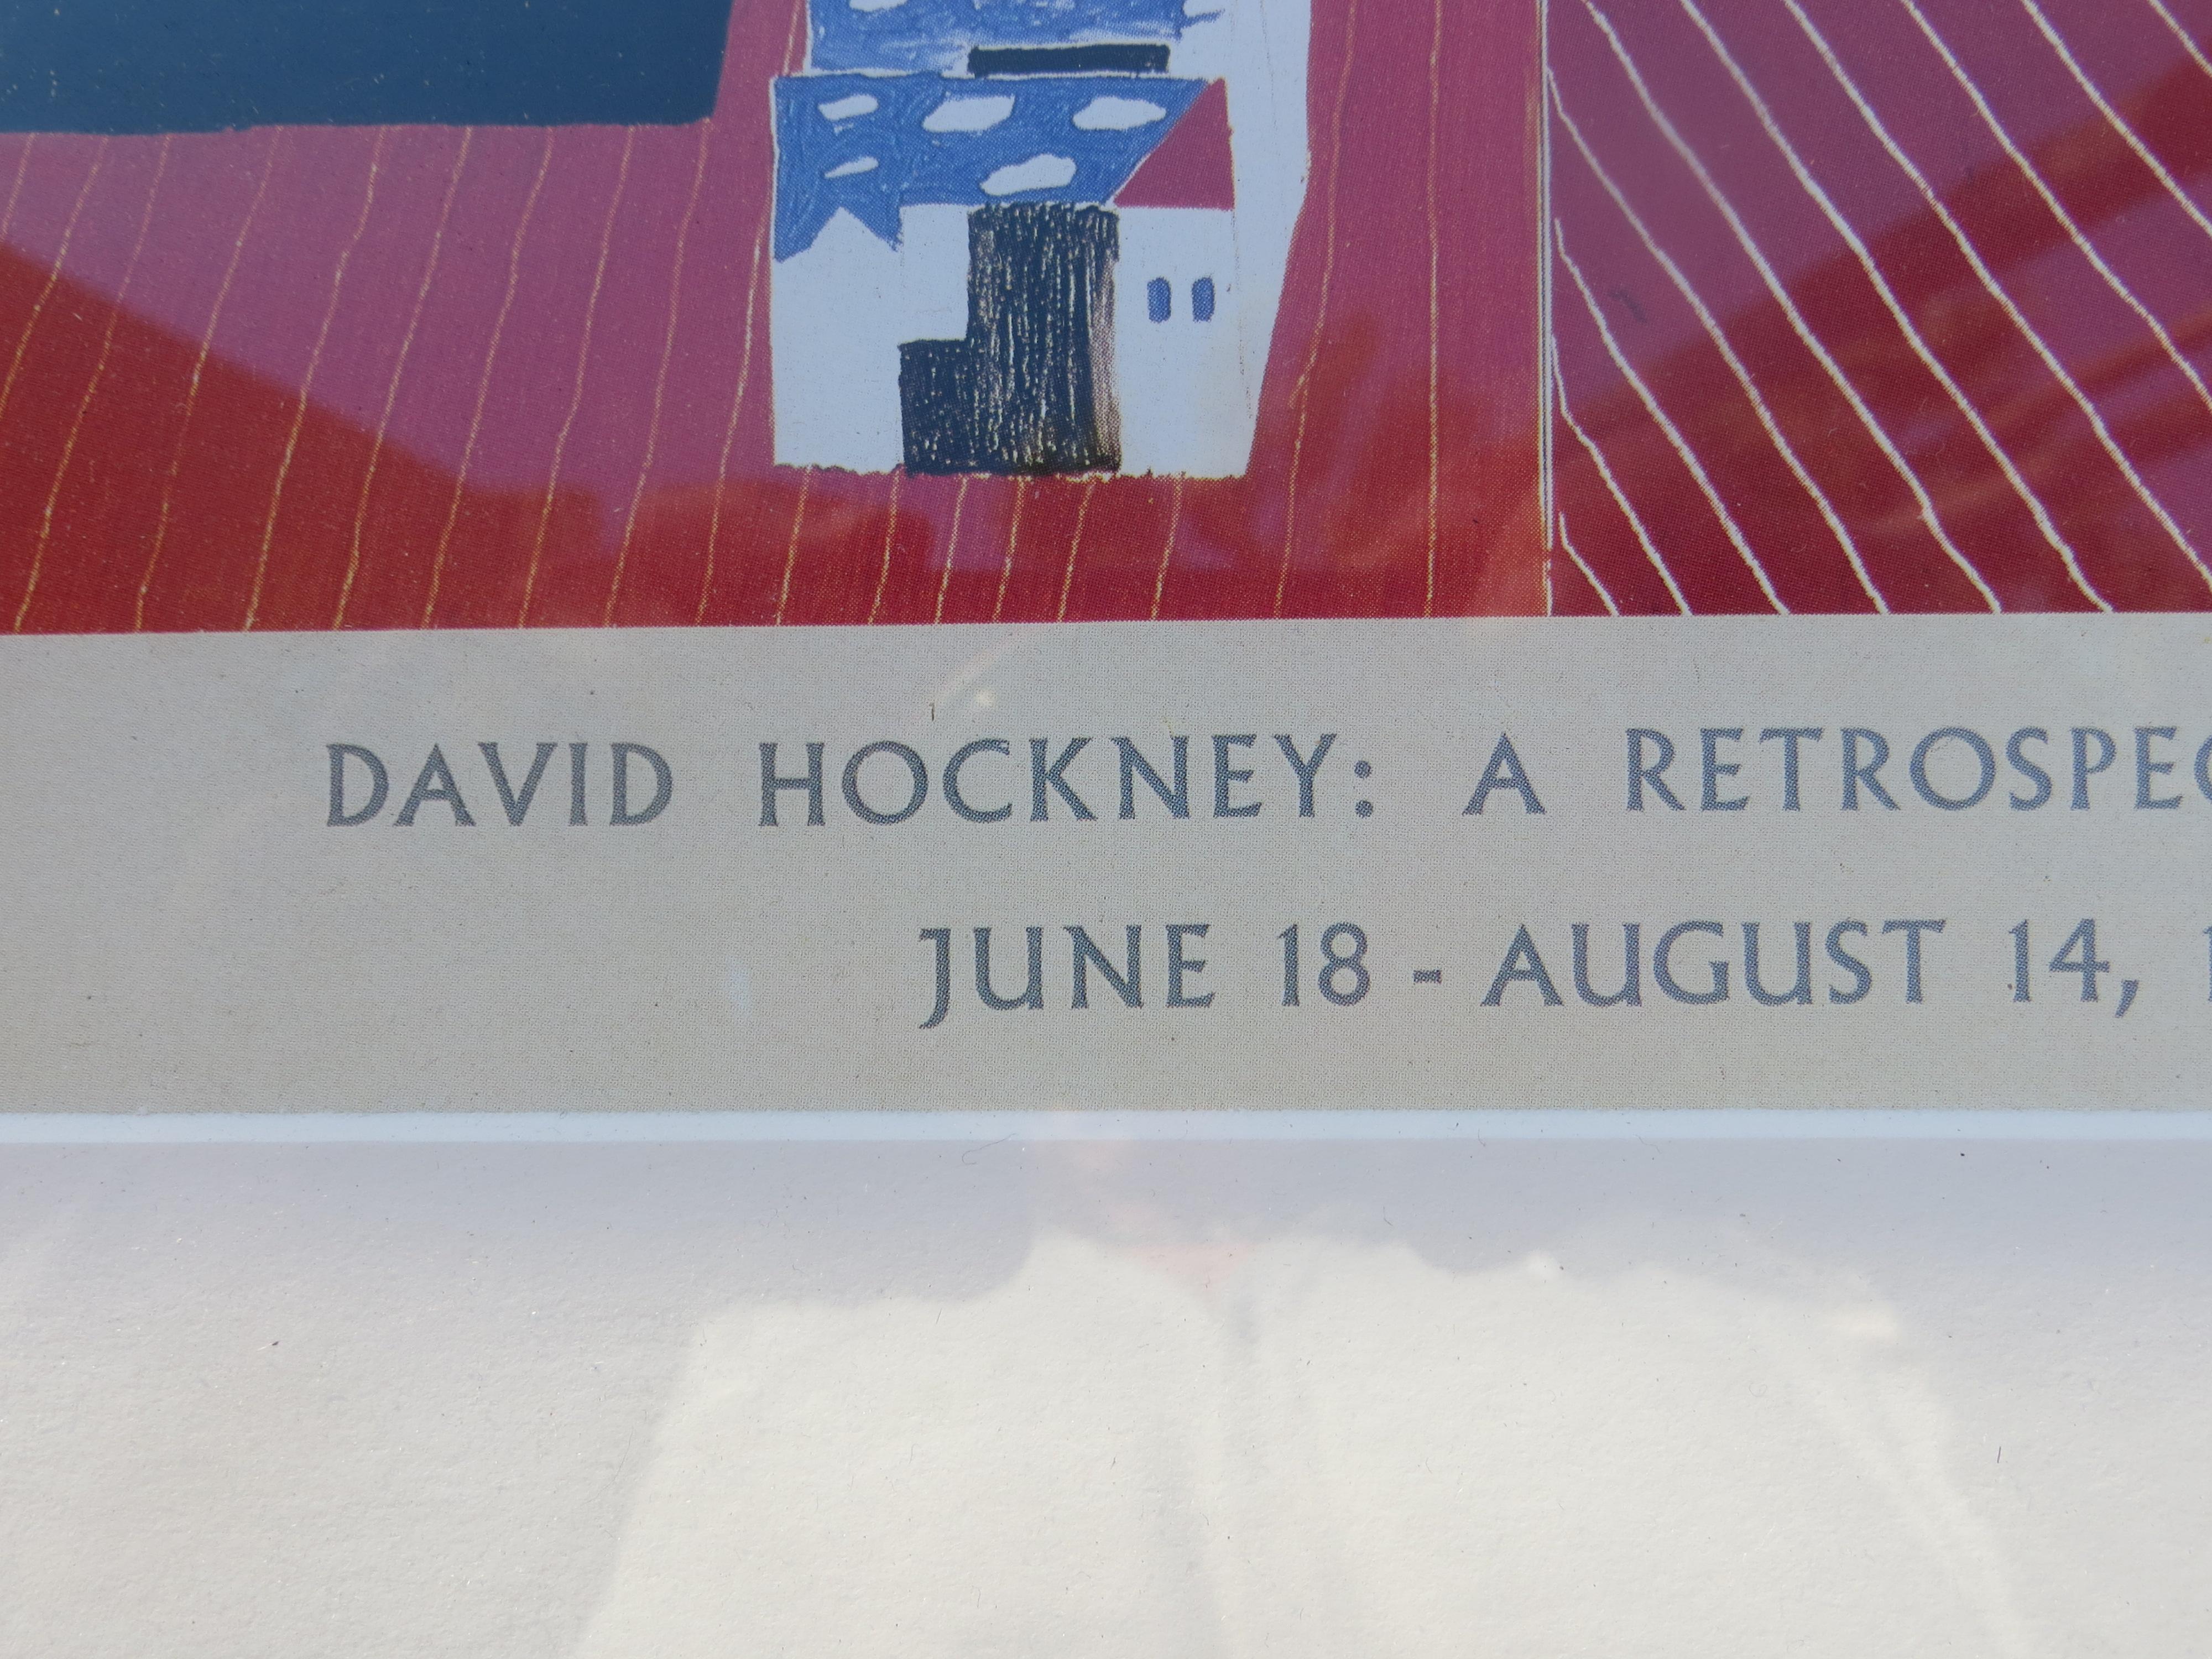 David Hockney, A Retrospective, Pop Art Print Exhibition Poster, 1988  For Sale 4